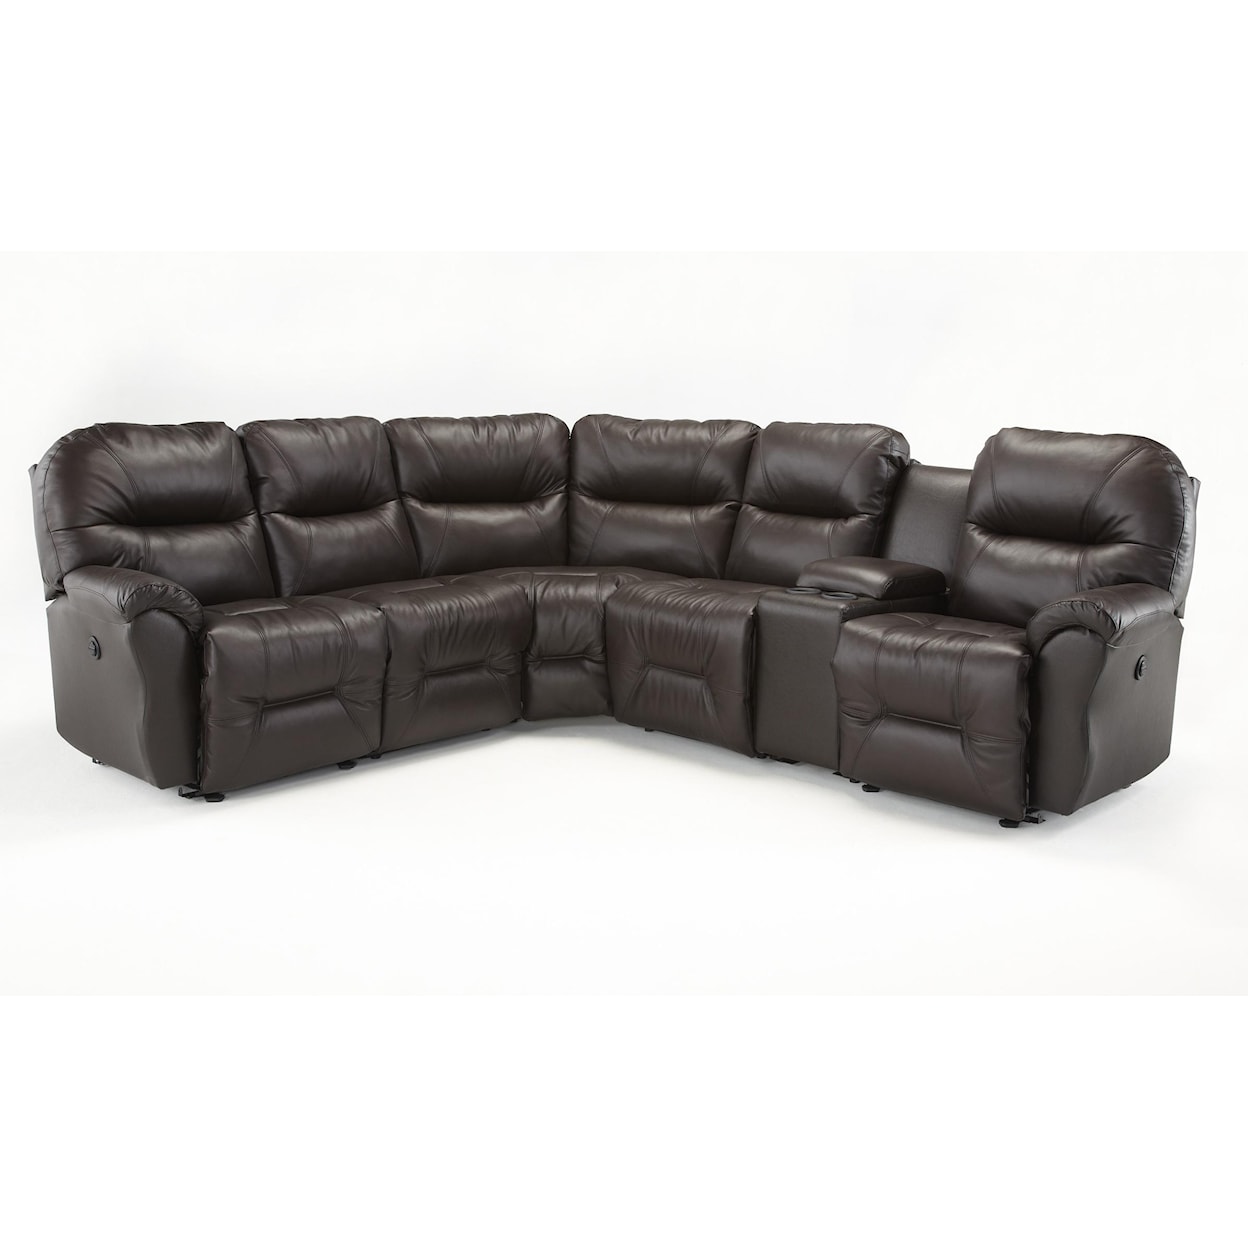 Bravo Furniture Bodie 6 Pc Power Reclining Sectional Sofa